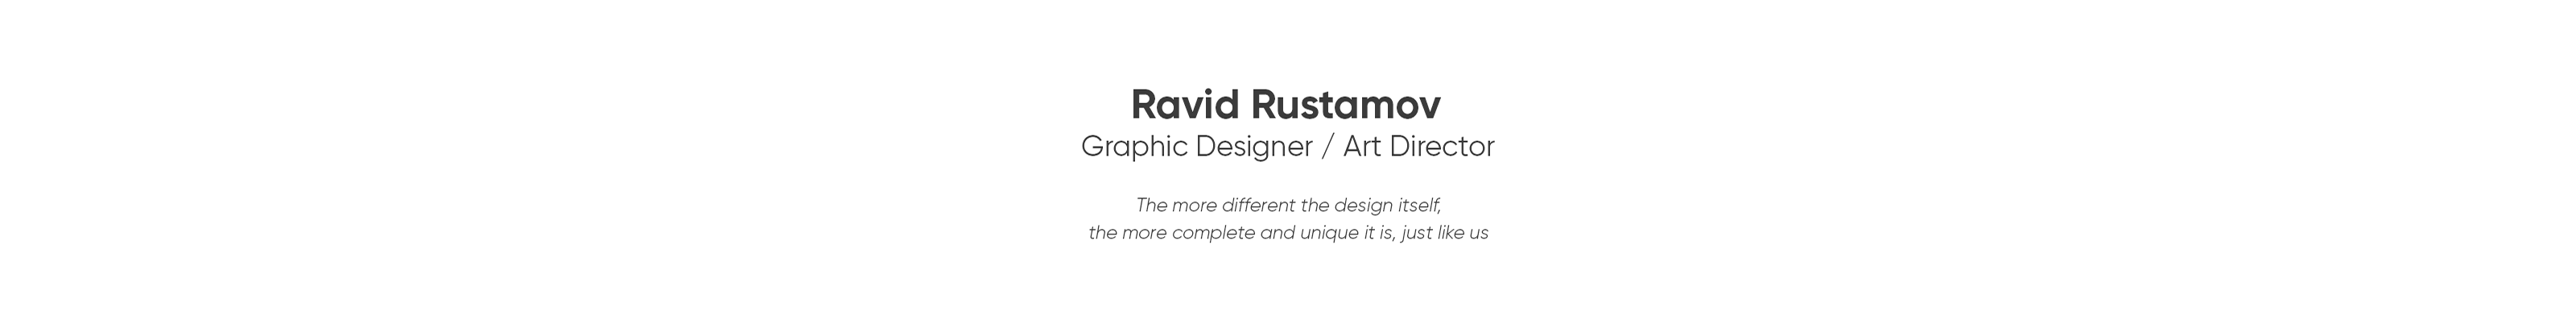 Ravid Rustamov's profile banner